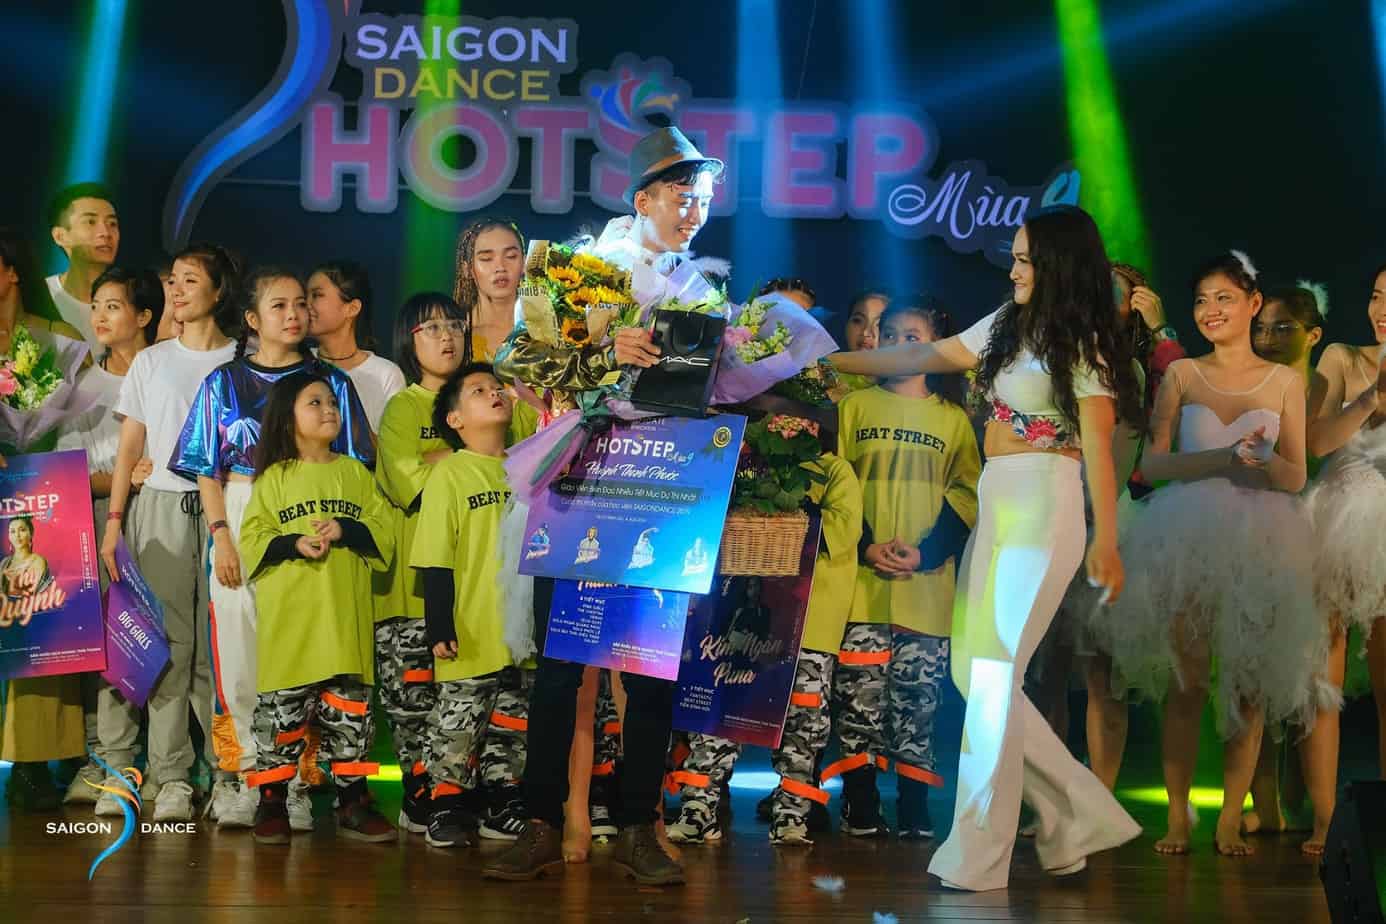 - Review of Saigon Dance School